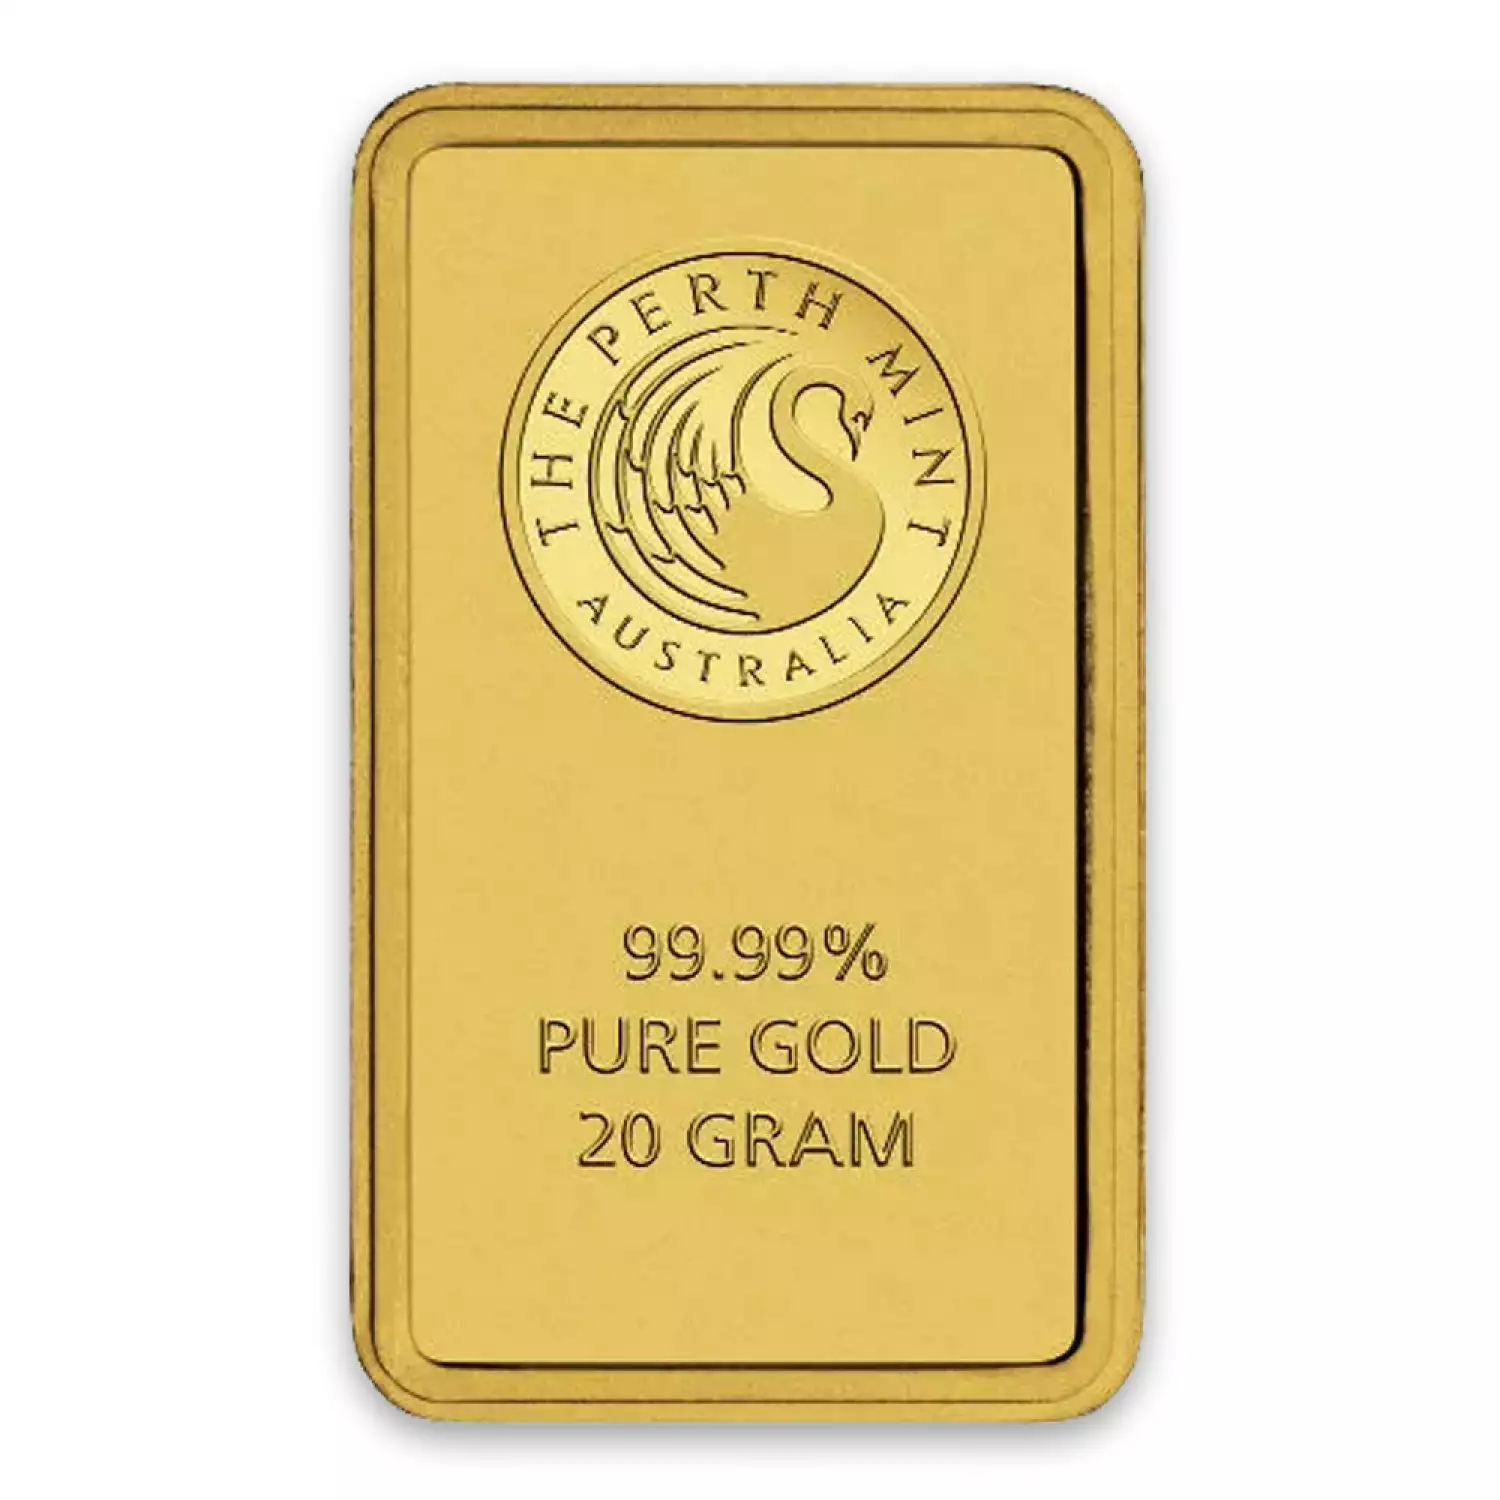 20g Australian Perth Mint gold bar - minted